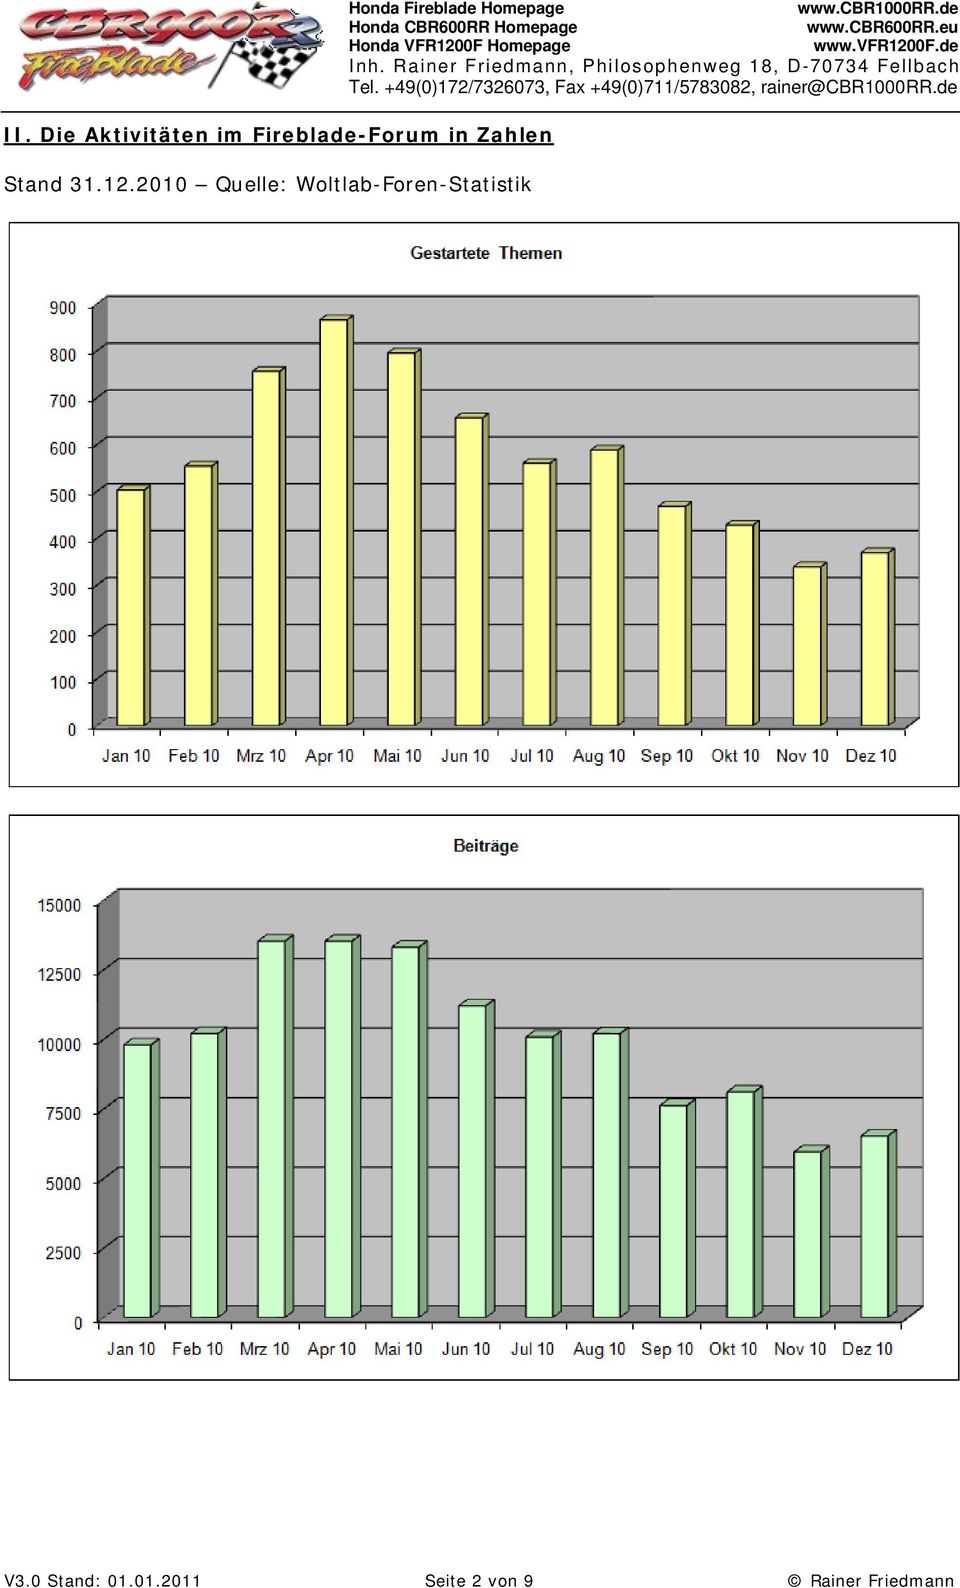 2010 Quelle: Woltlab-Foren-Statistik Honda